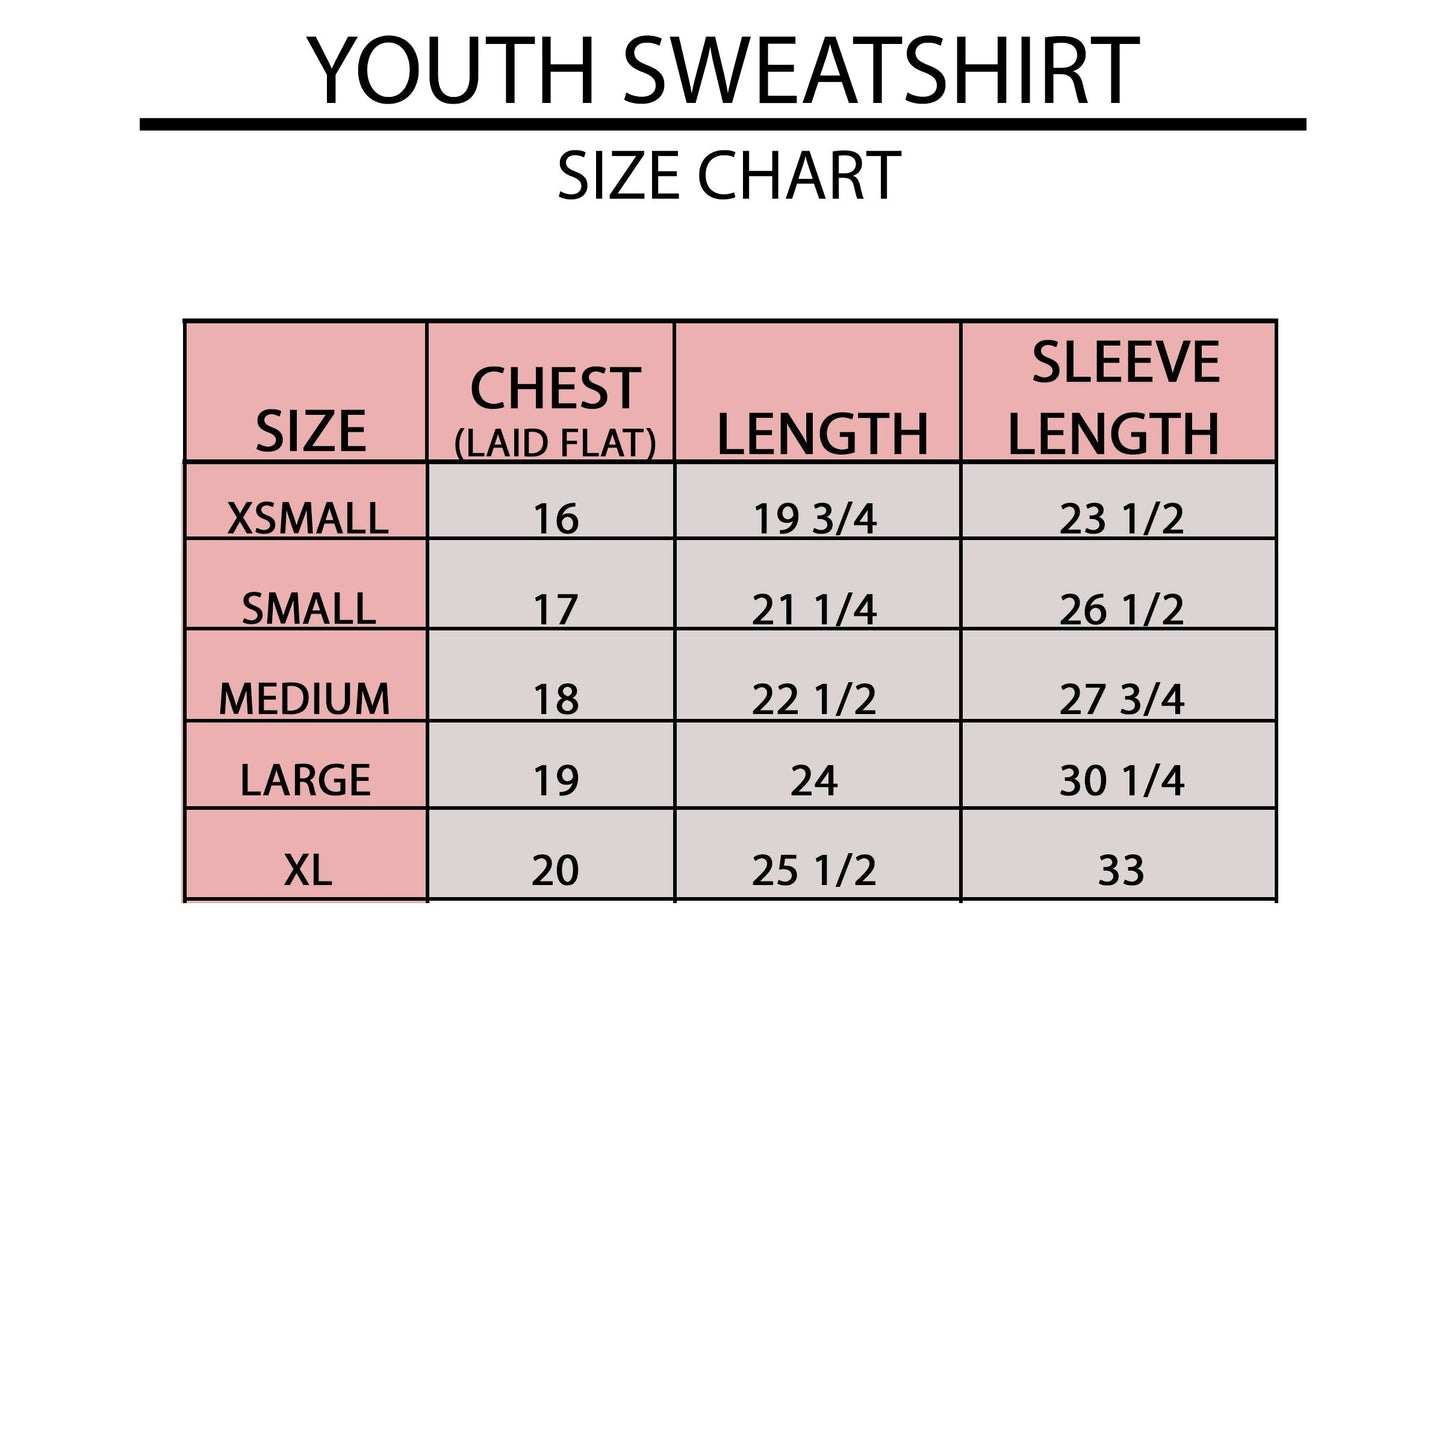 Stay Wild Buffalo | Youth Sweatshirt